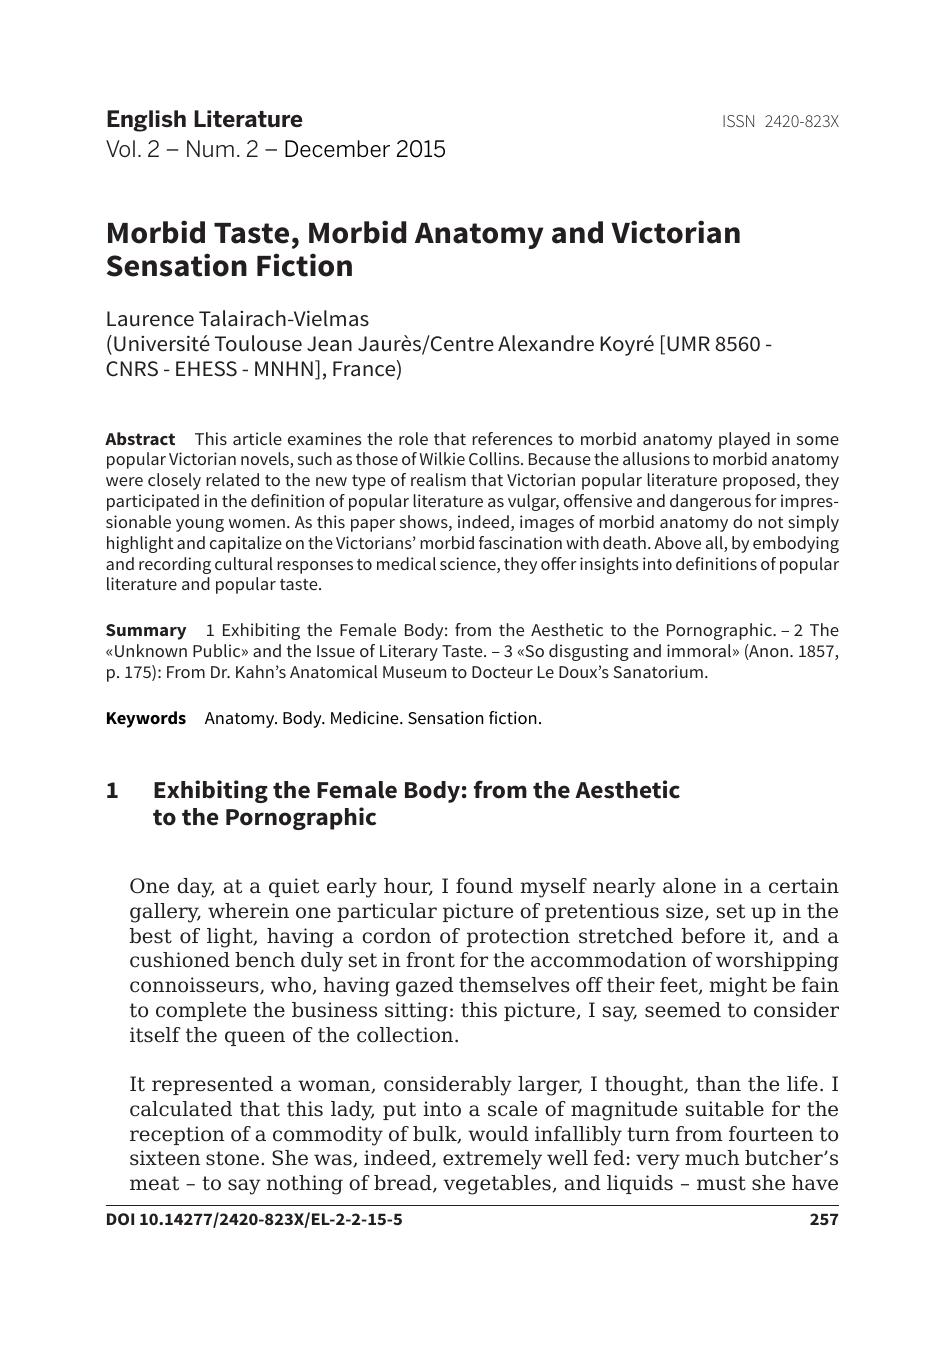 Morbid Taste, Morbid Anatomy and Victorian, 2015